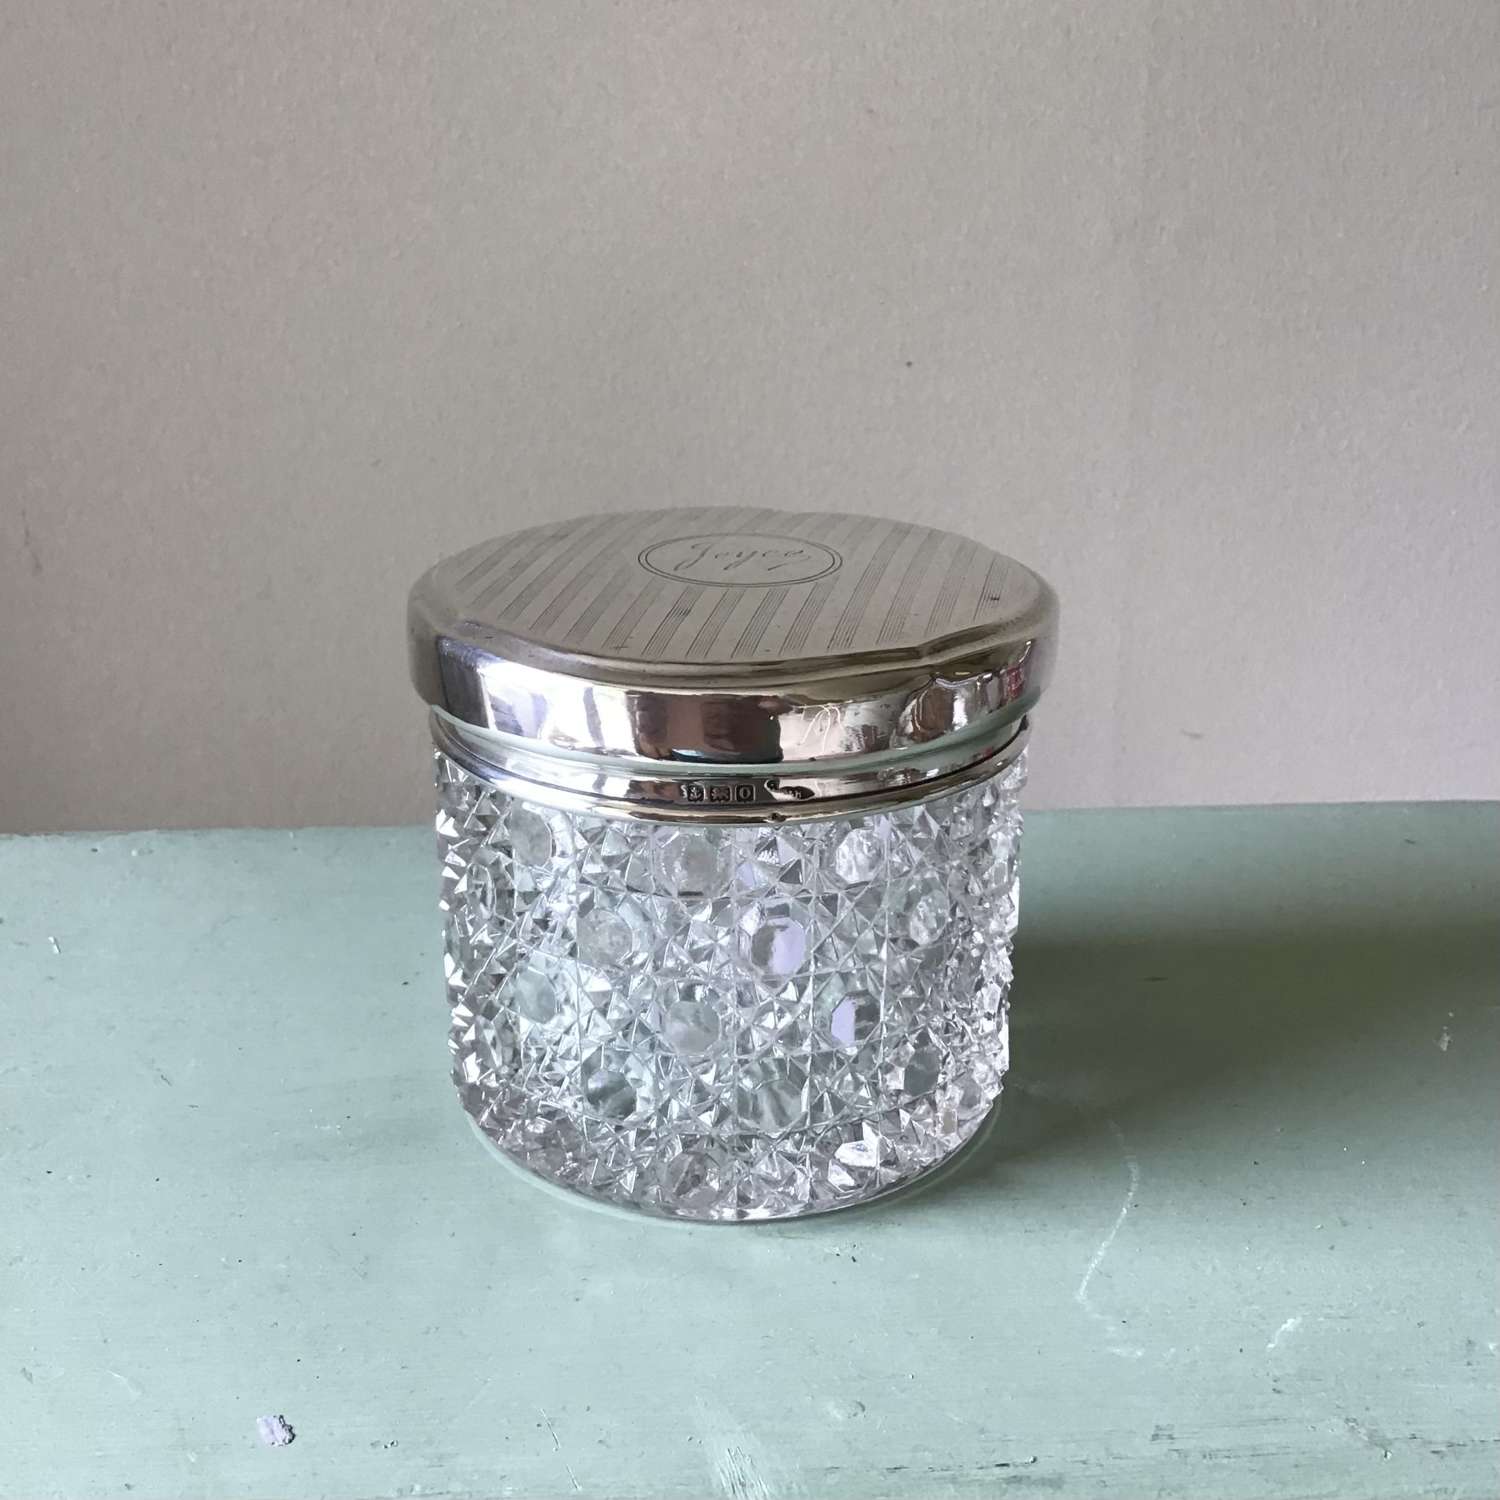 1938 hallmarked silver topped powder pot/jar engraved “Joyce” a/f